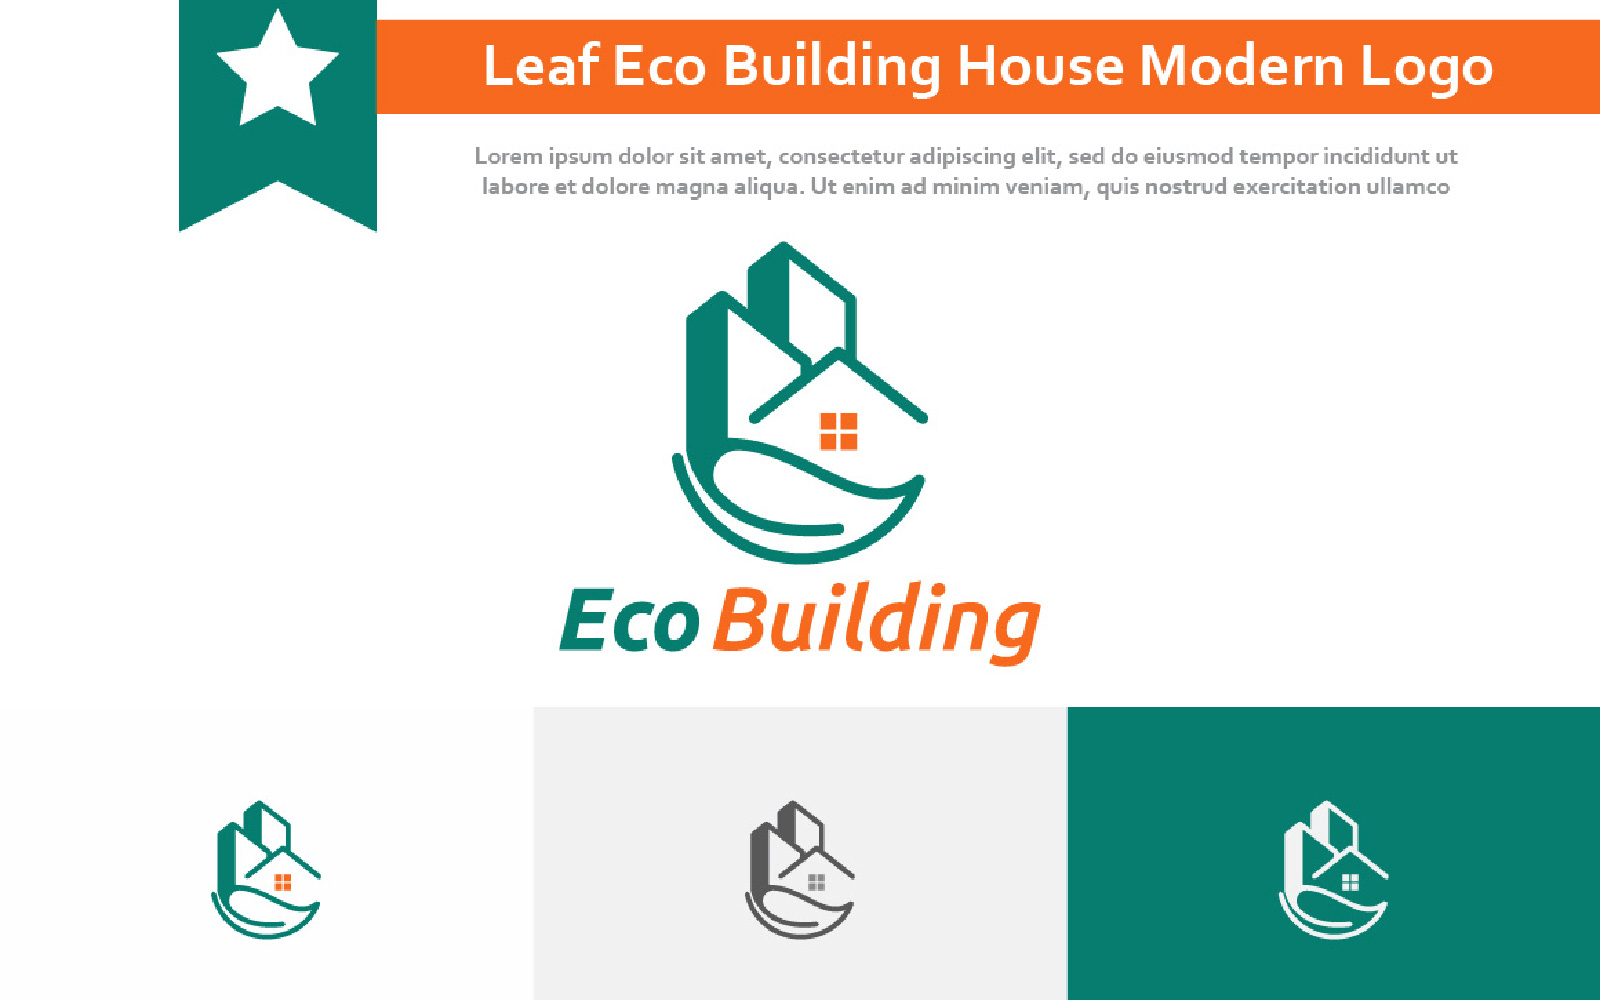 Leaf Eco Building House Hotel Flat Apartment Simple Modern Logo